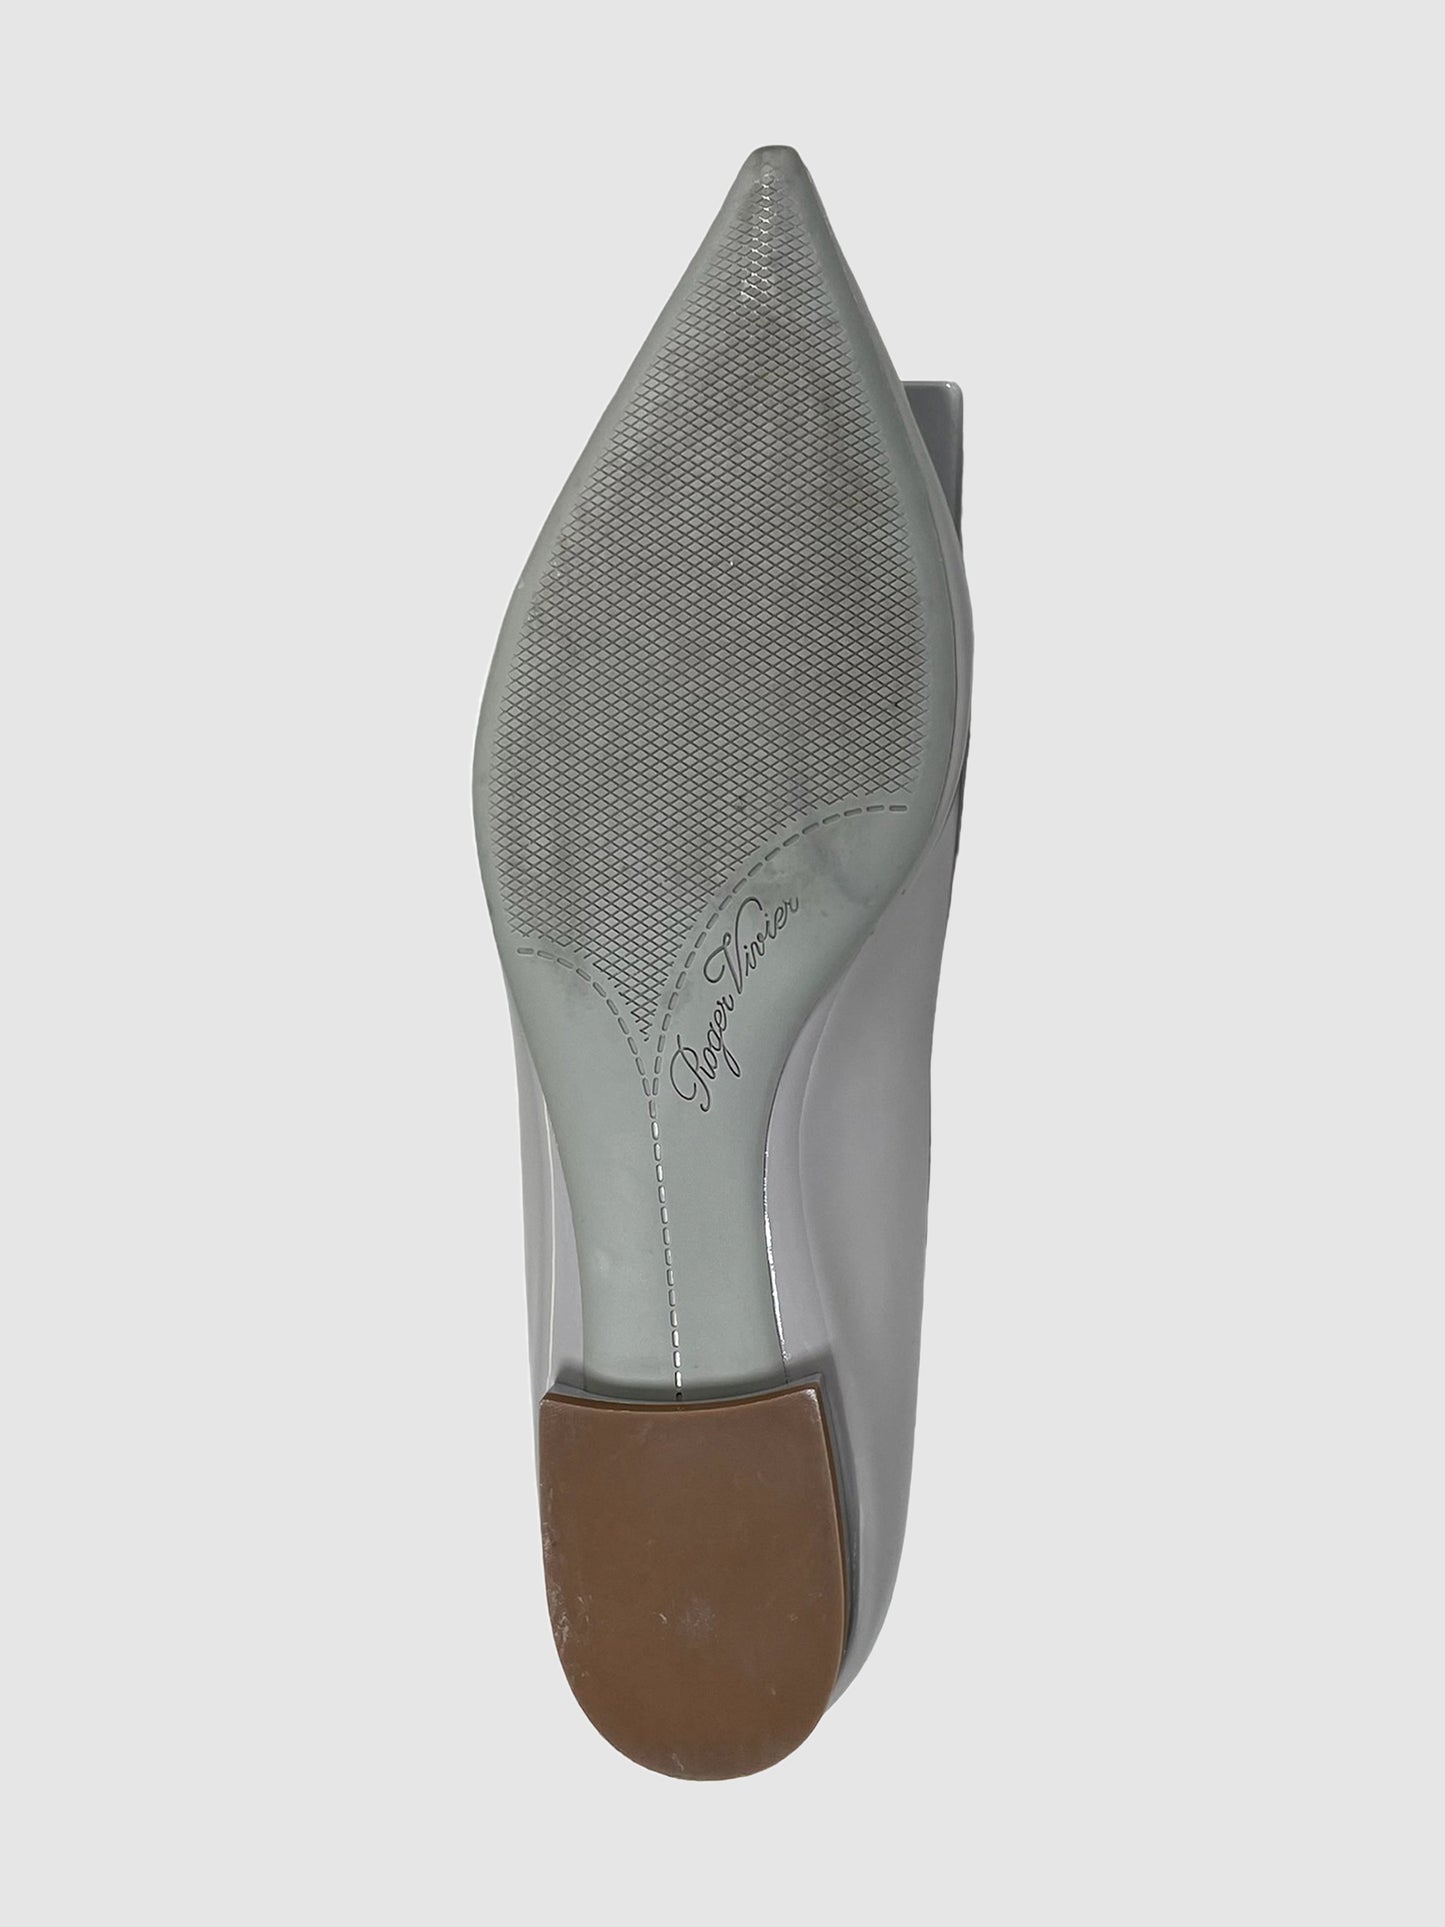 Roger Vivier Patent Leather Gommettine Ballerina Flats - Size 41